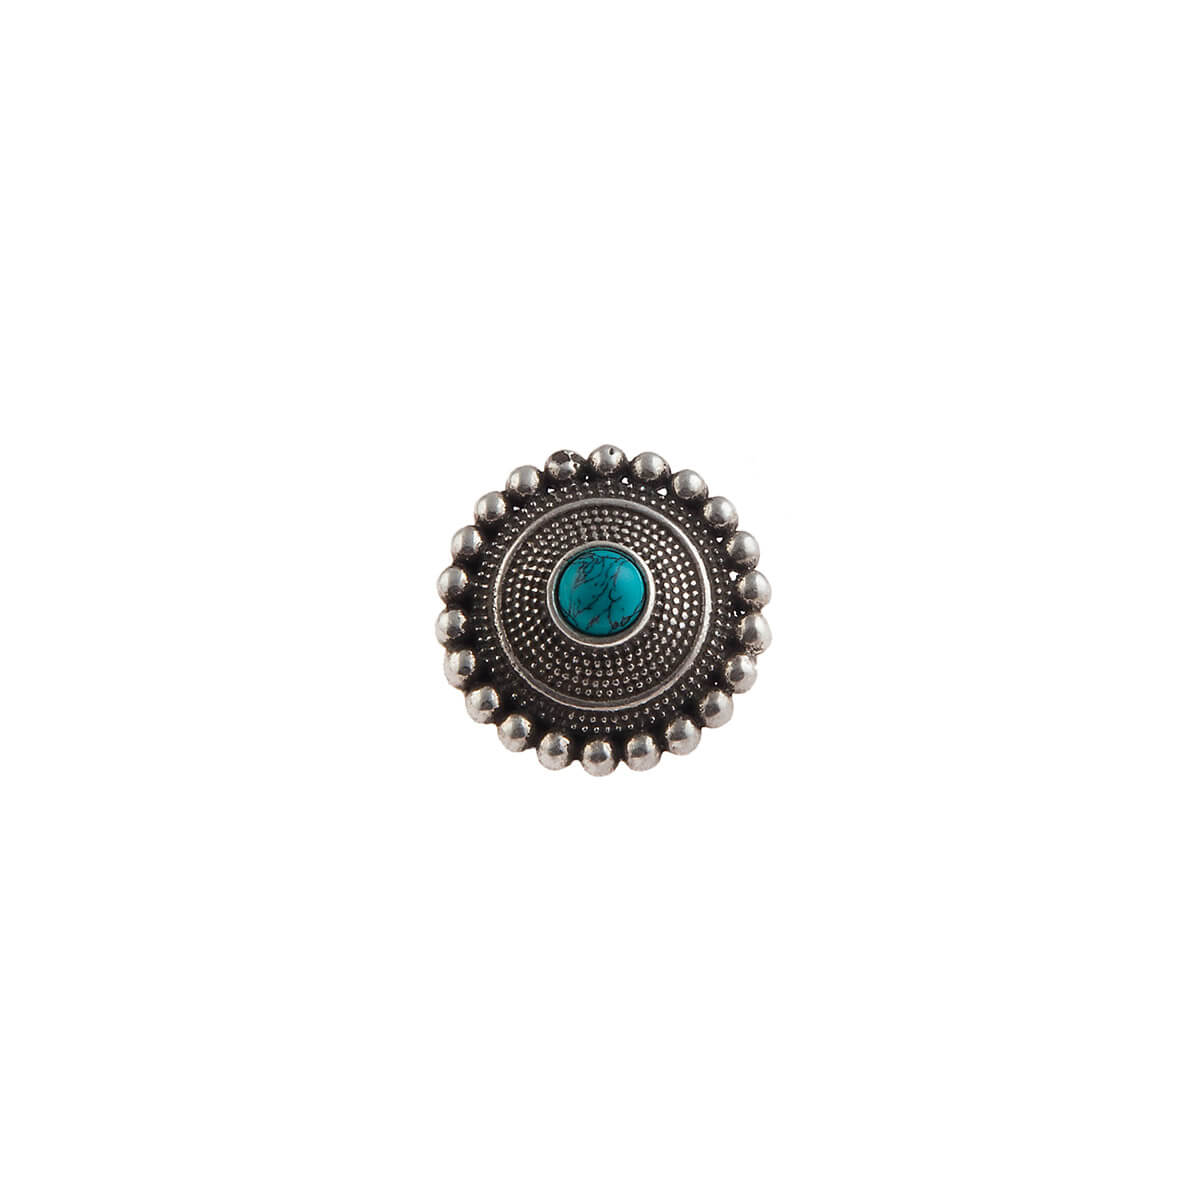 Abha Silver Nose Pin - Pierced, Turquoise Stone - mohabygeetanjali